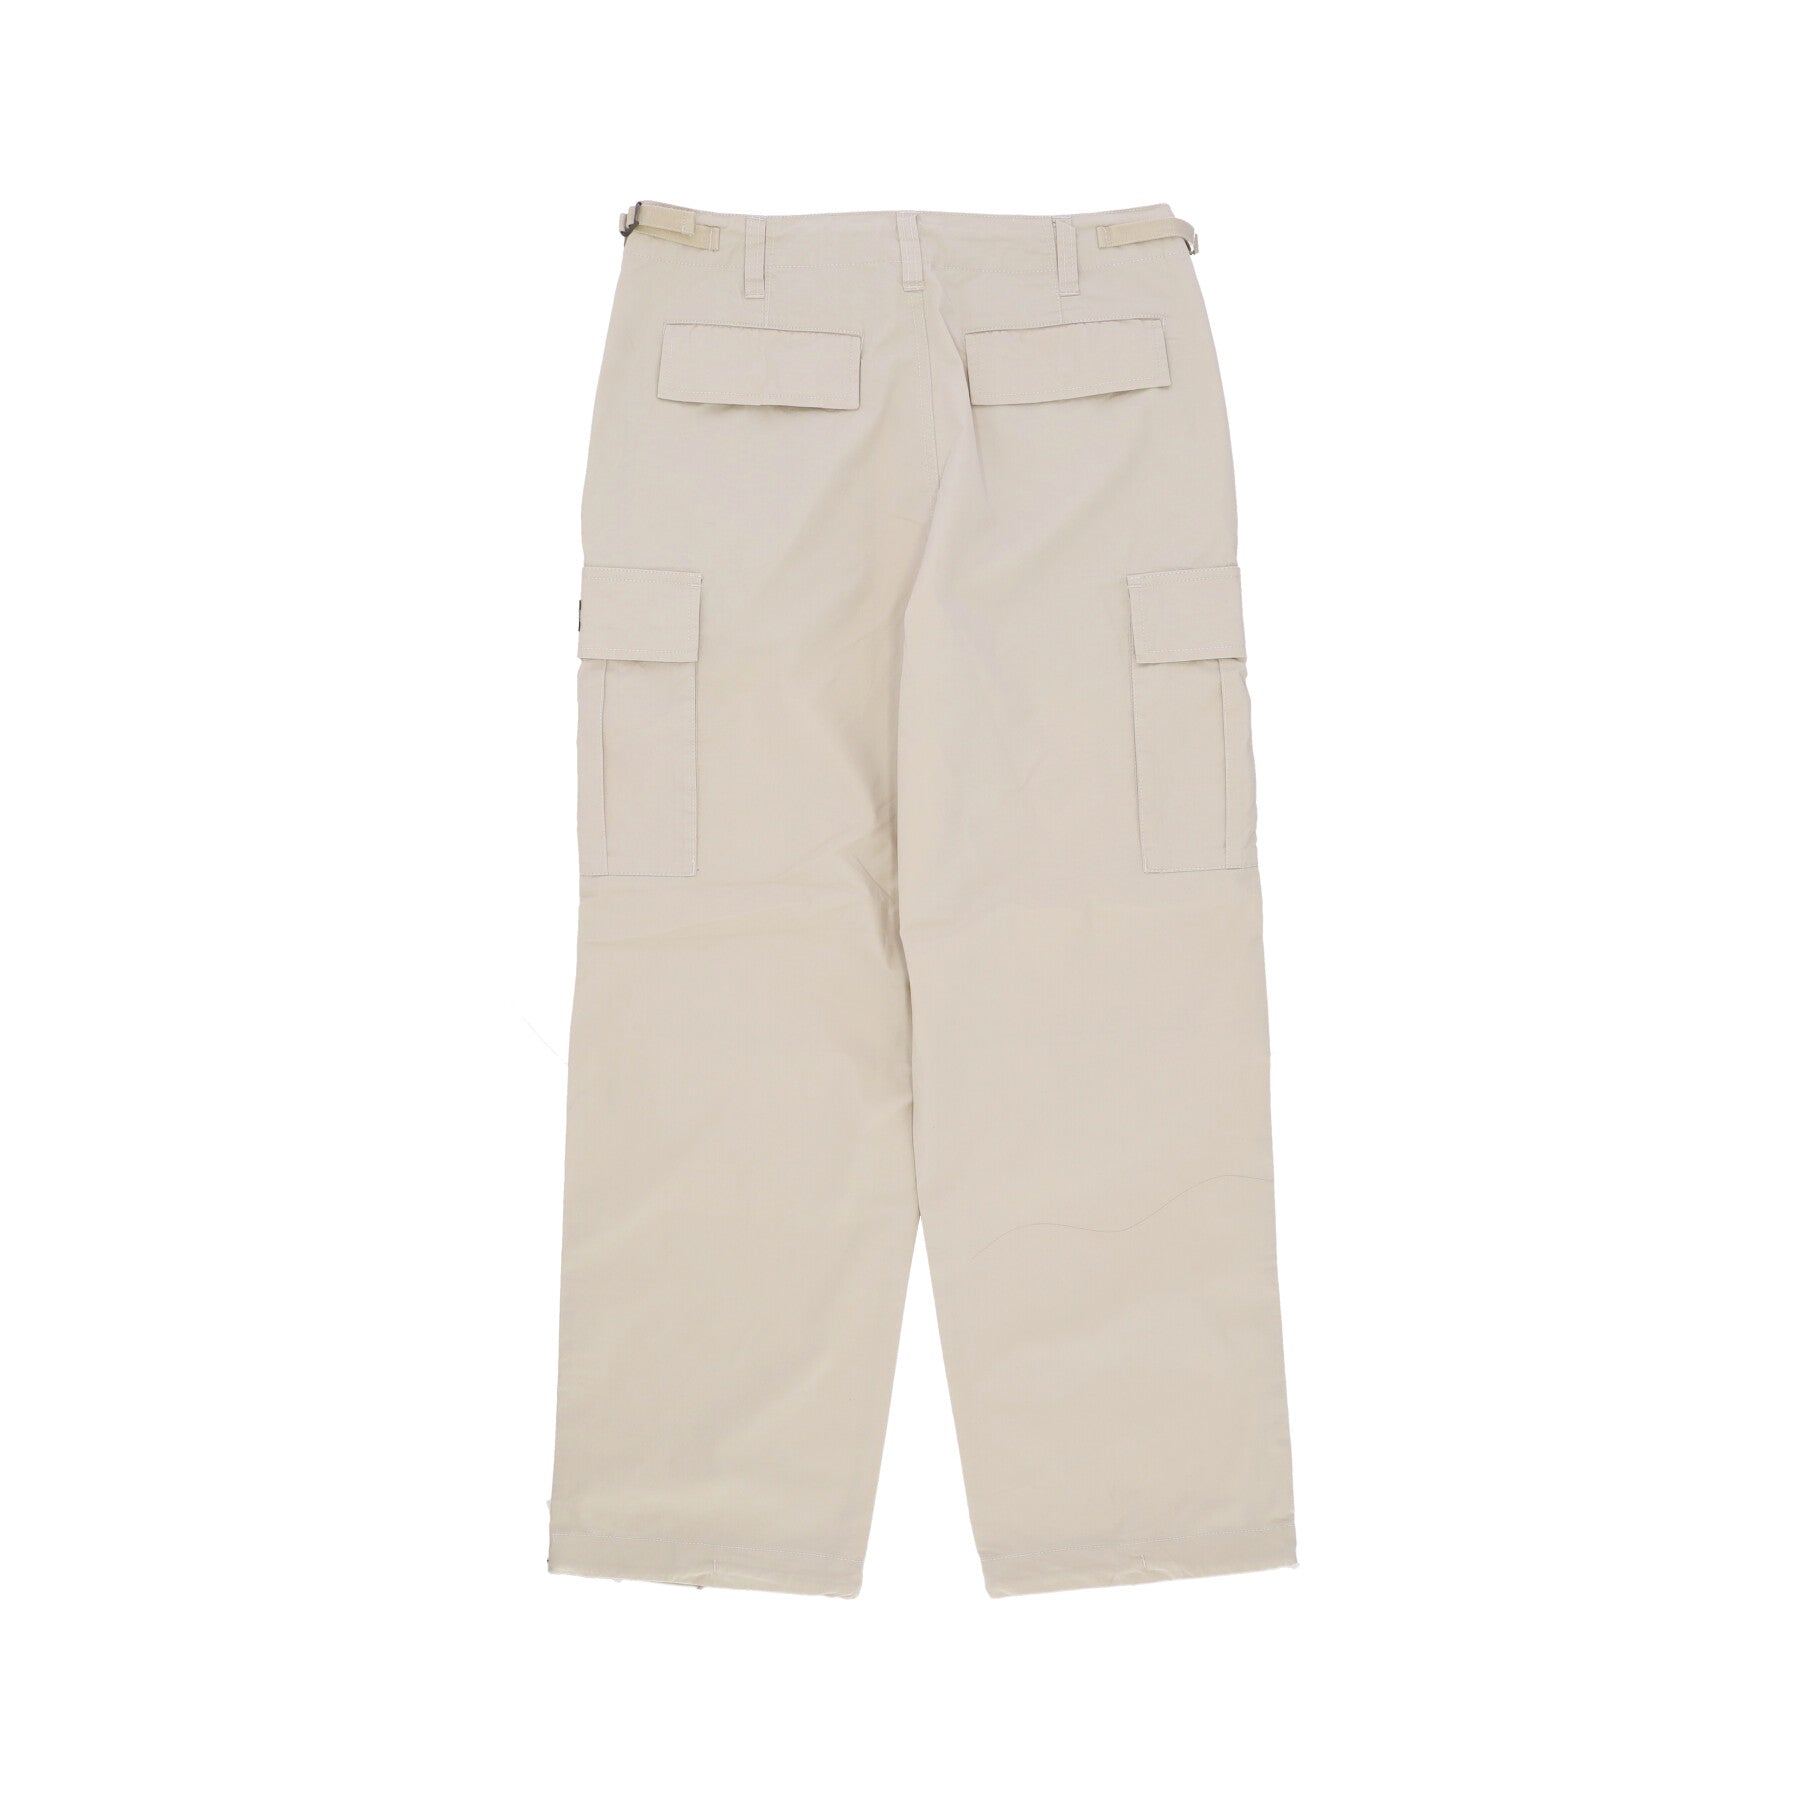 Pantalone Lungo Uomo Big Timer Cargo Pant Silver Grey 142020223